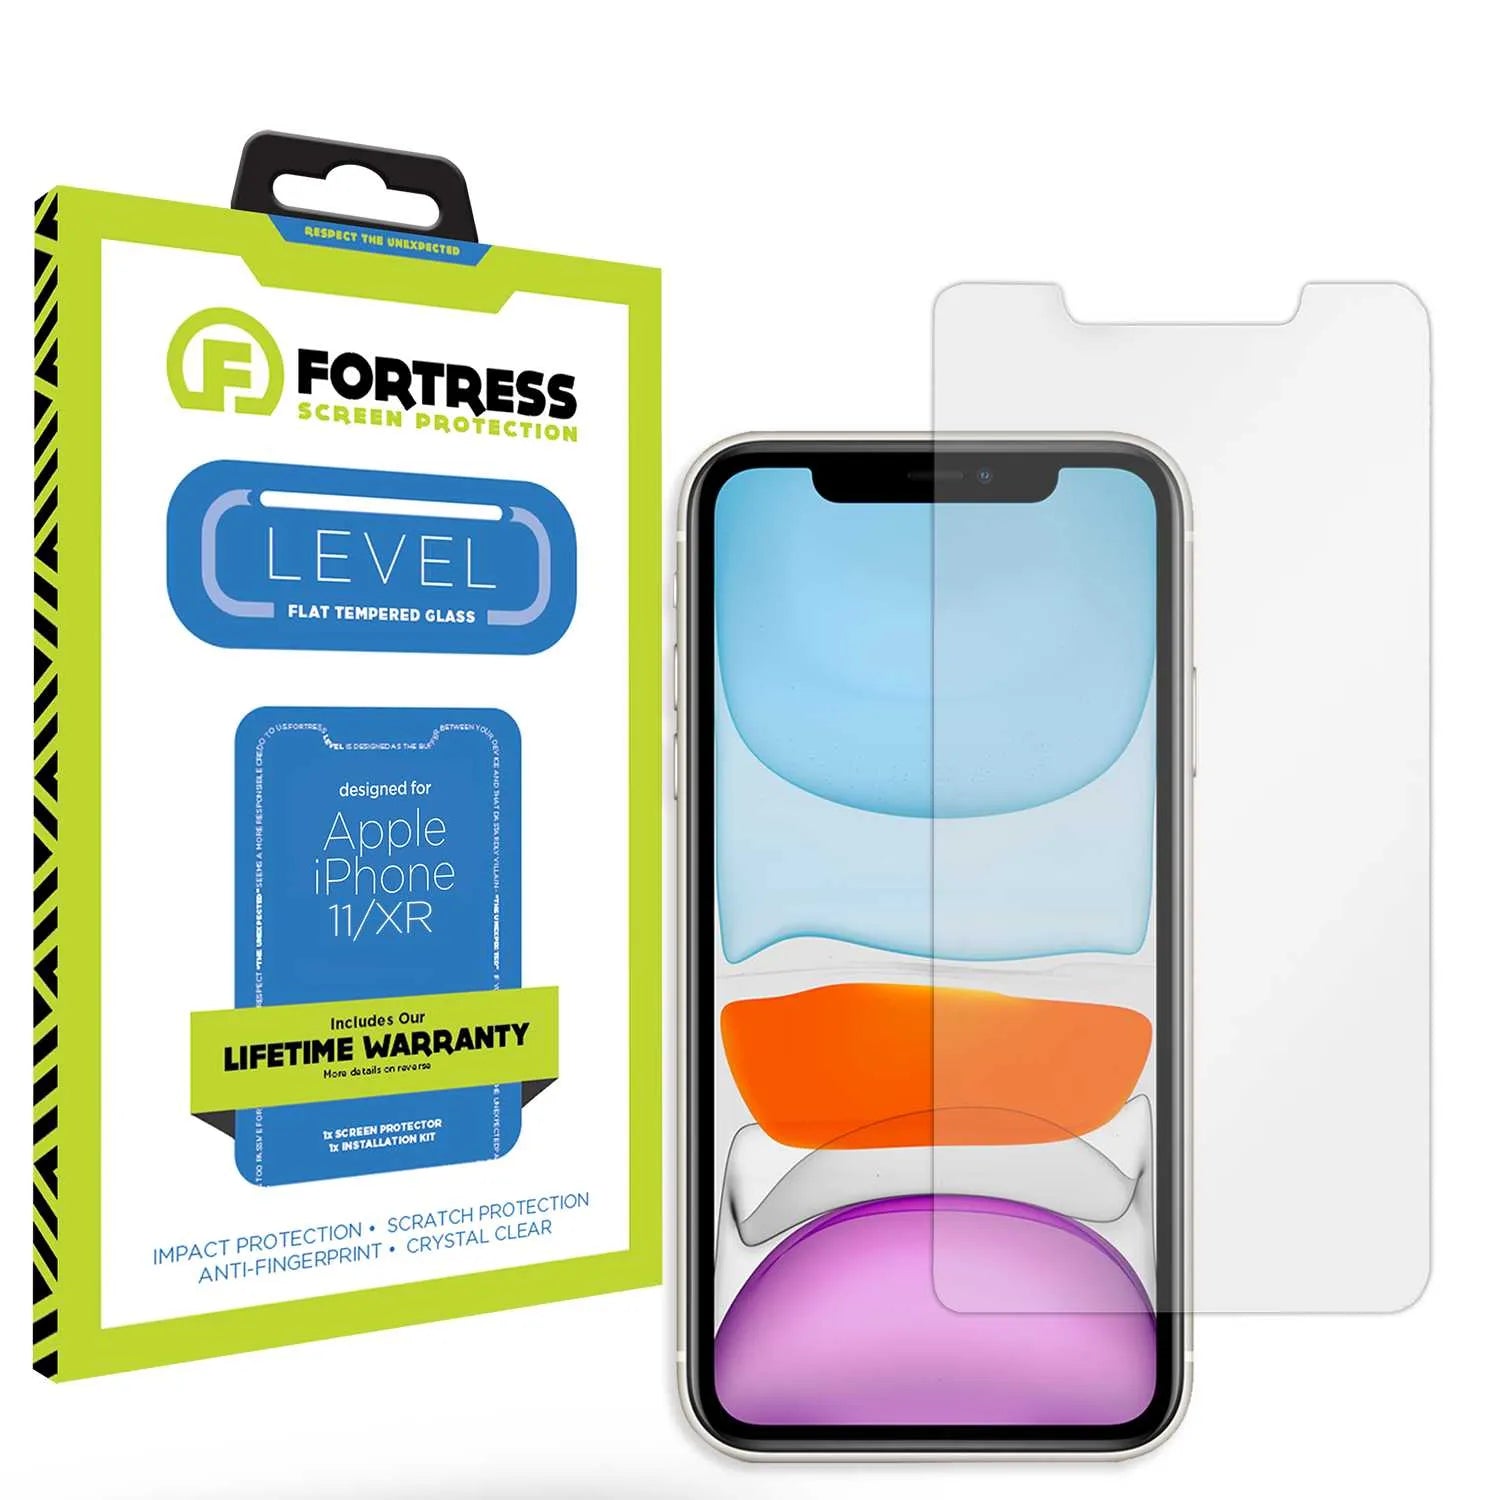 Fortress Fortress Warranty Replacement Program AppleiPhoneXRScreenProtector Warranty 8.99